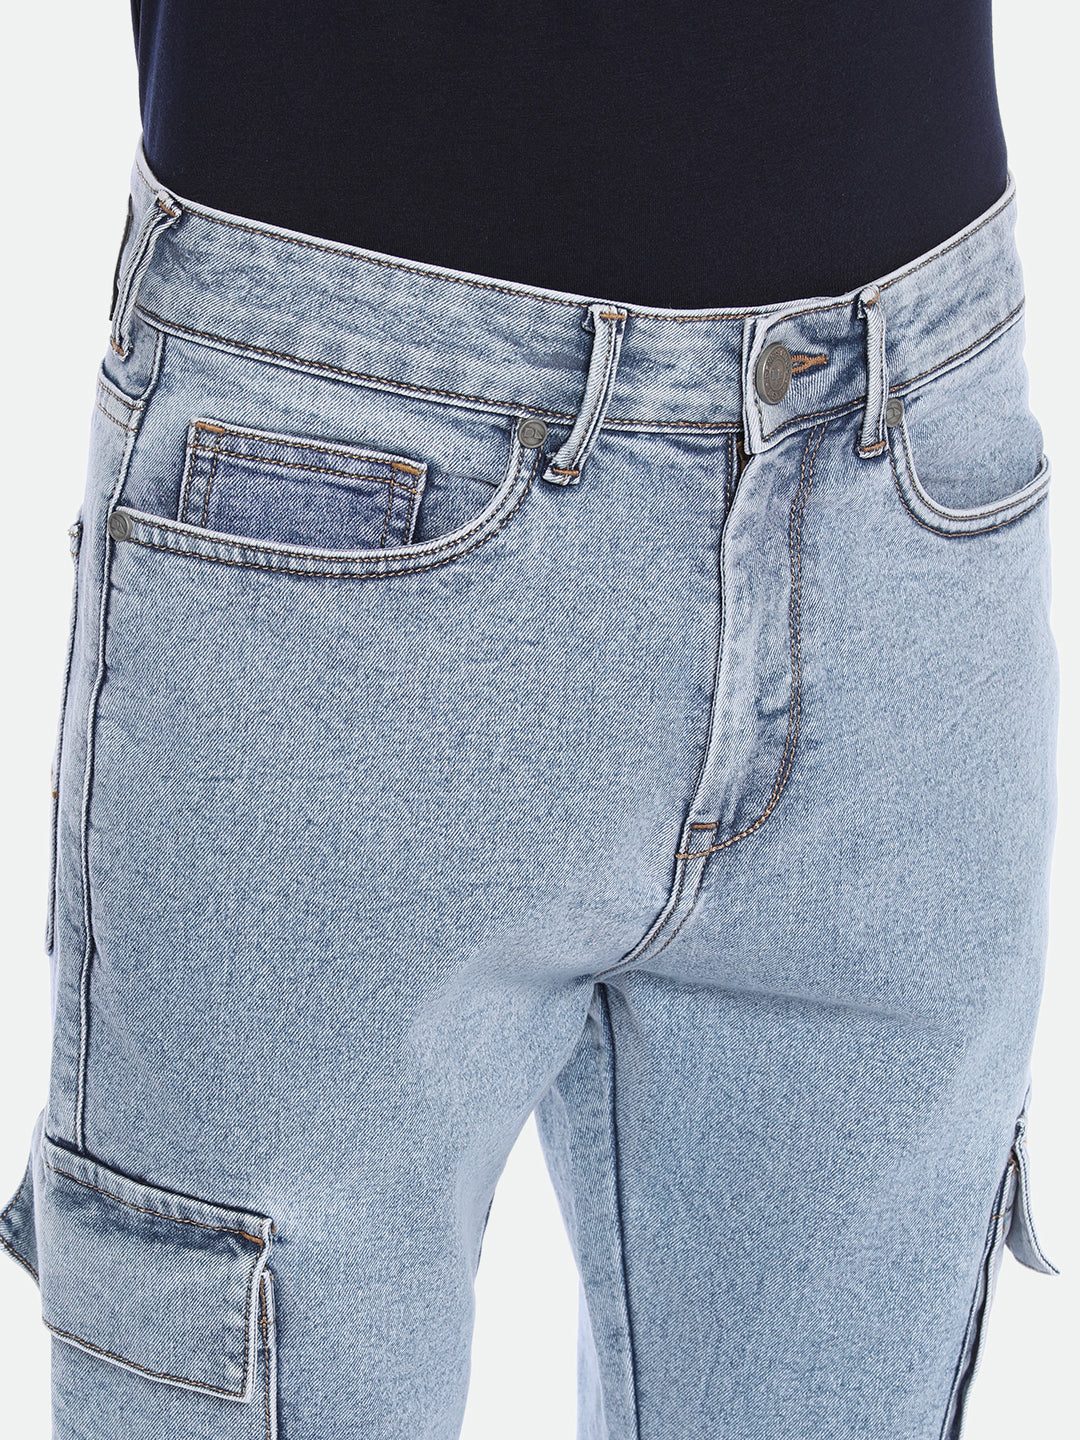 Dennis Lingo Mens's MID BLUE Washed Jeans